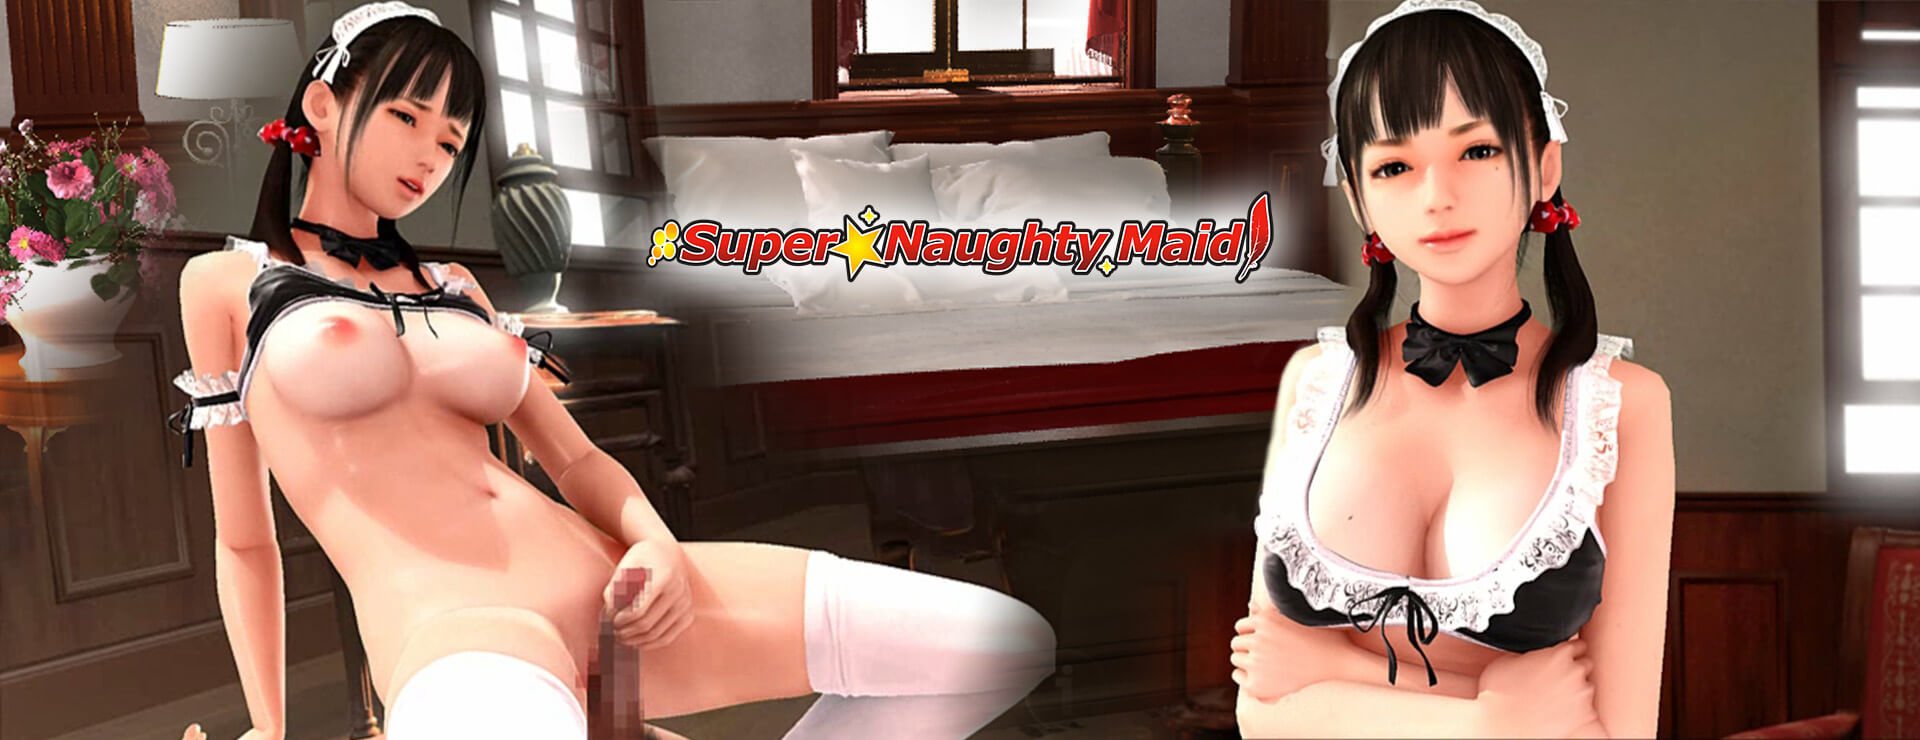 Super Naughty Maid 1 - Simulation Spiel